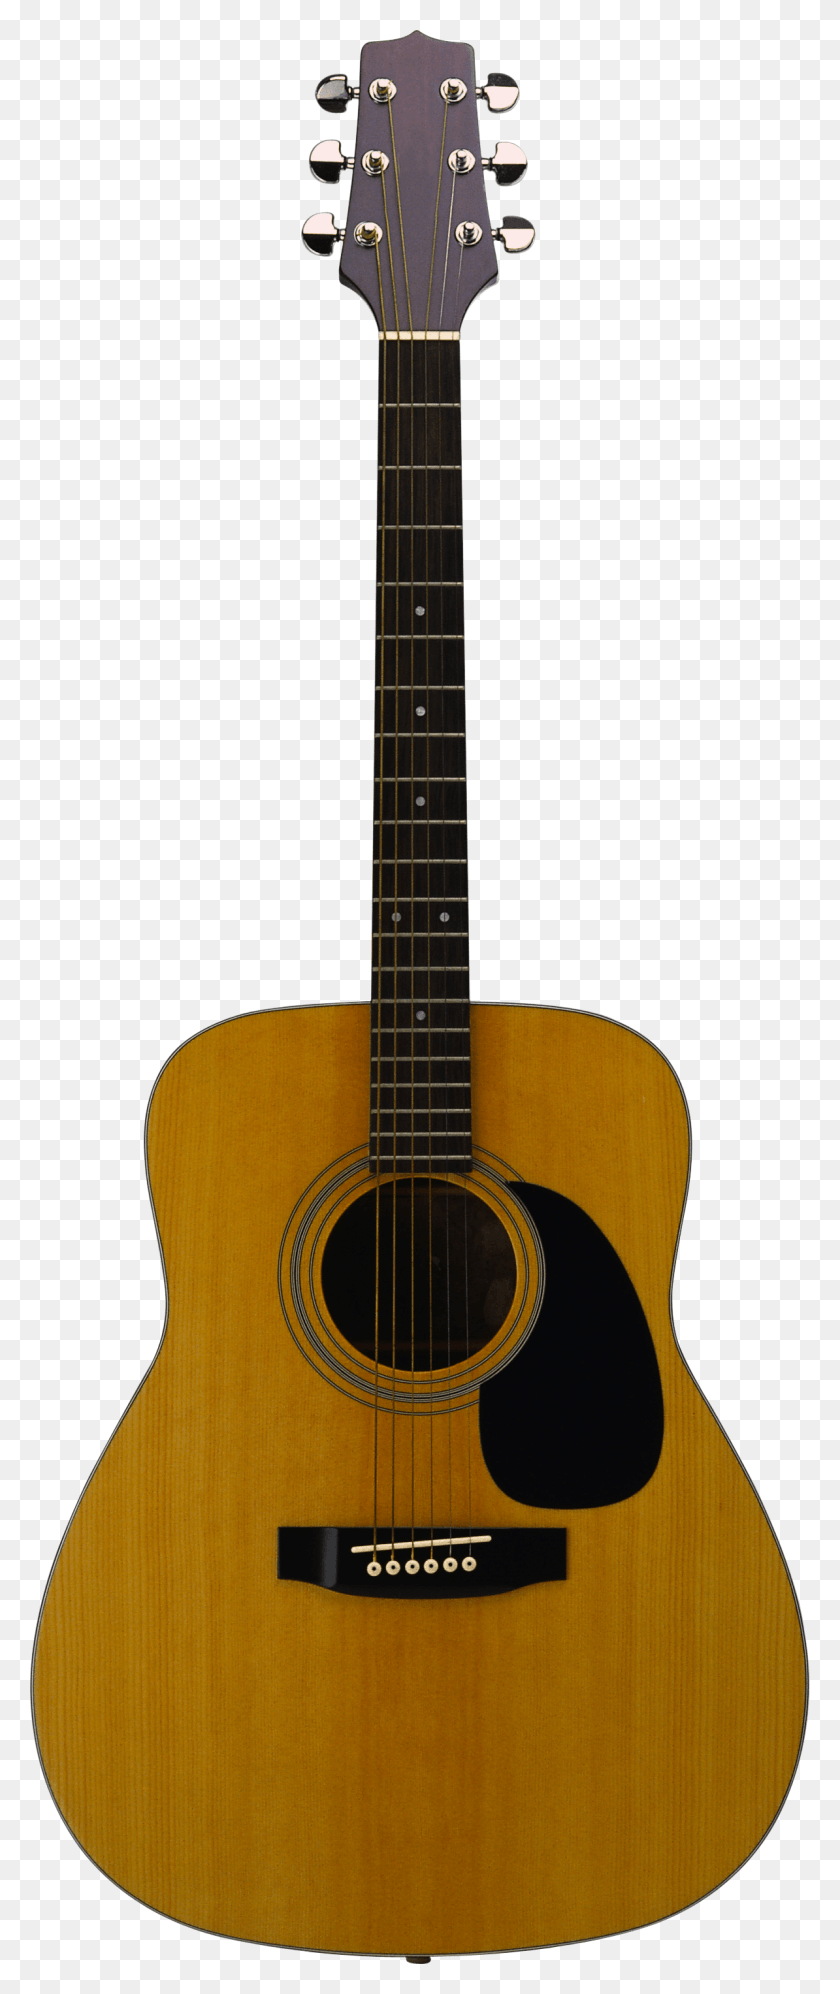 1194x2961 Descargar Png Guitarra Acústica 1969 Guild F, Actividades De Ocio, Instrumento Musical, Bajo Hd Png